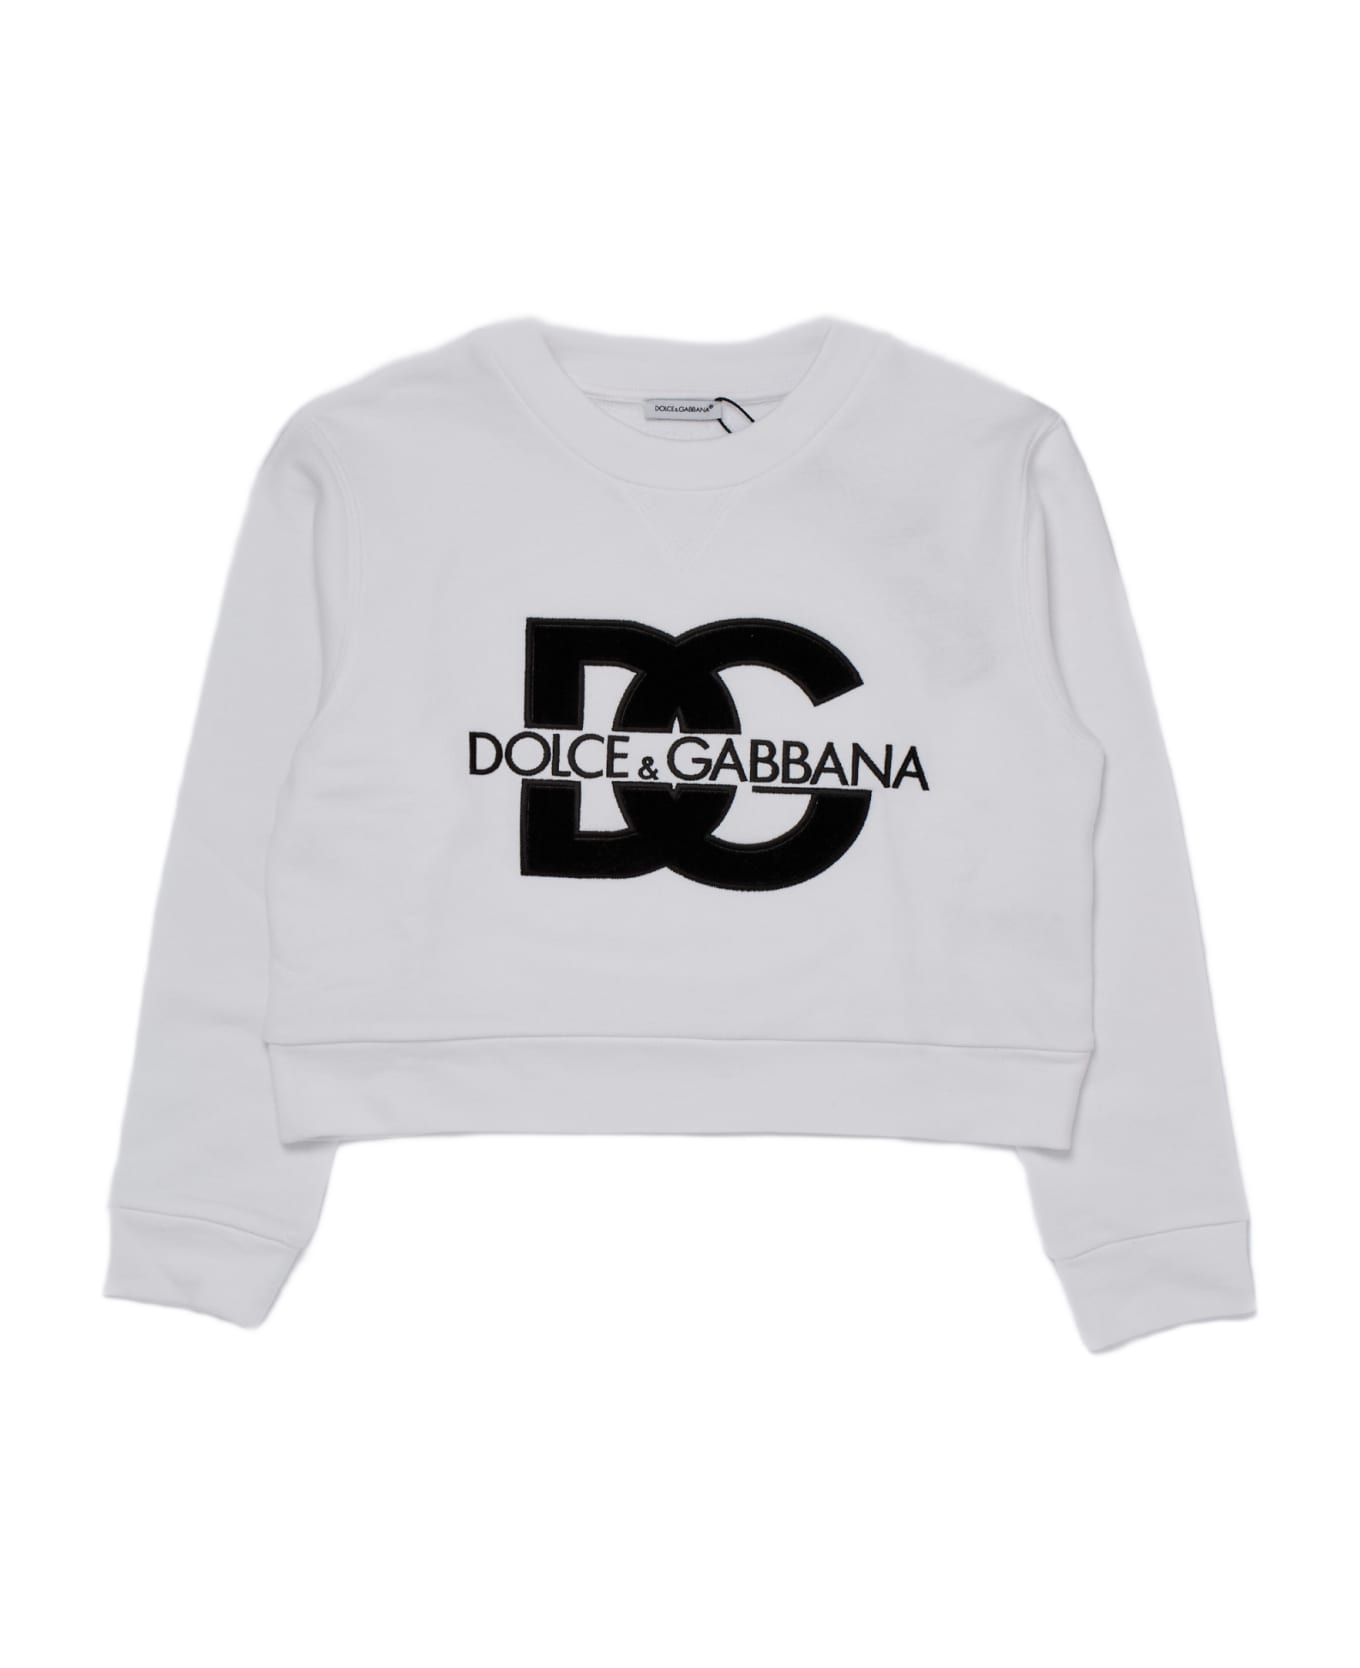 Dolce decoration & Gabbana Sweatshirt Sweatshirt - BIANCO